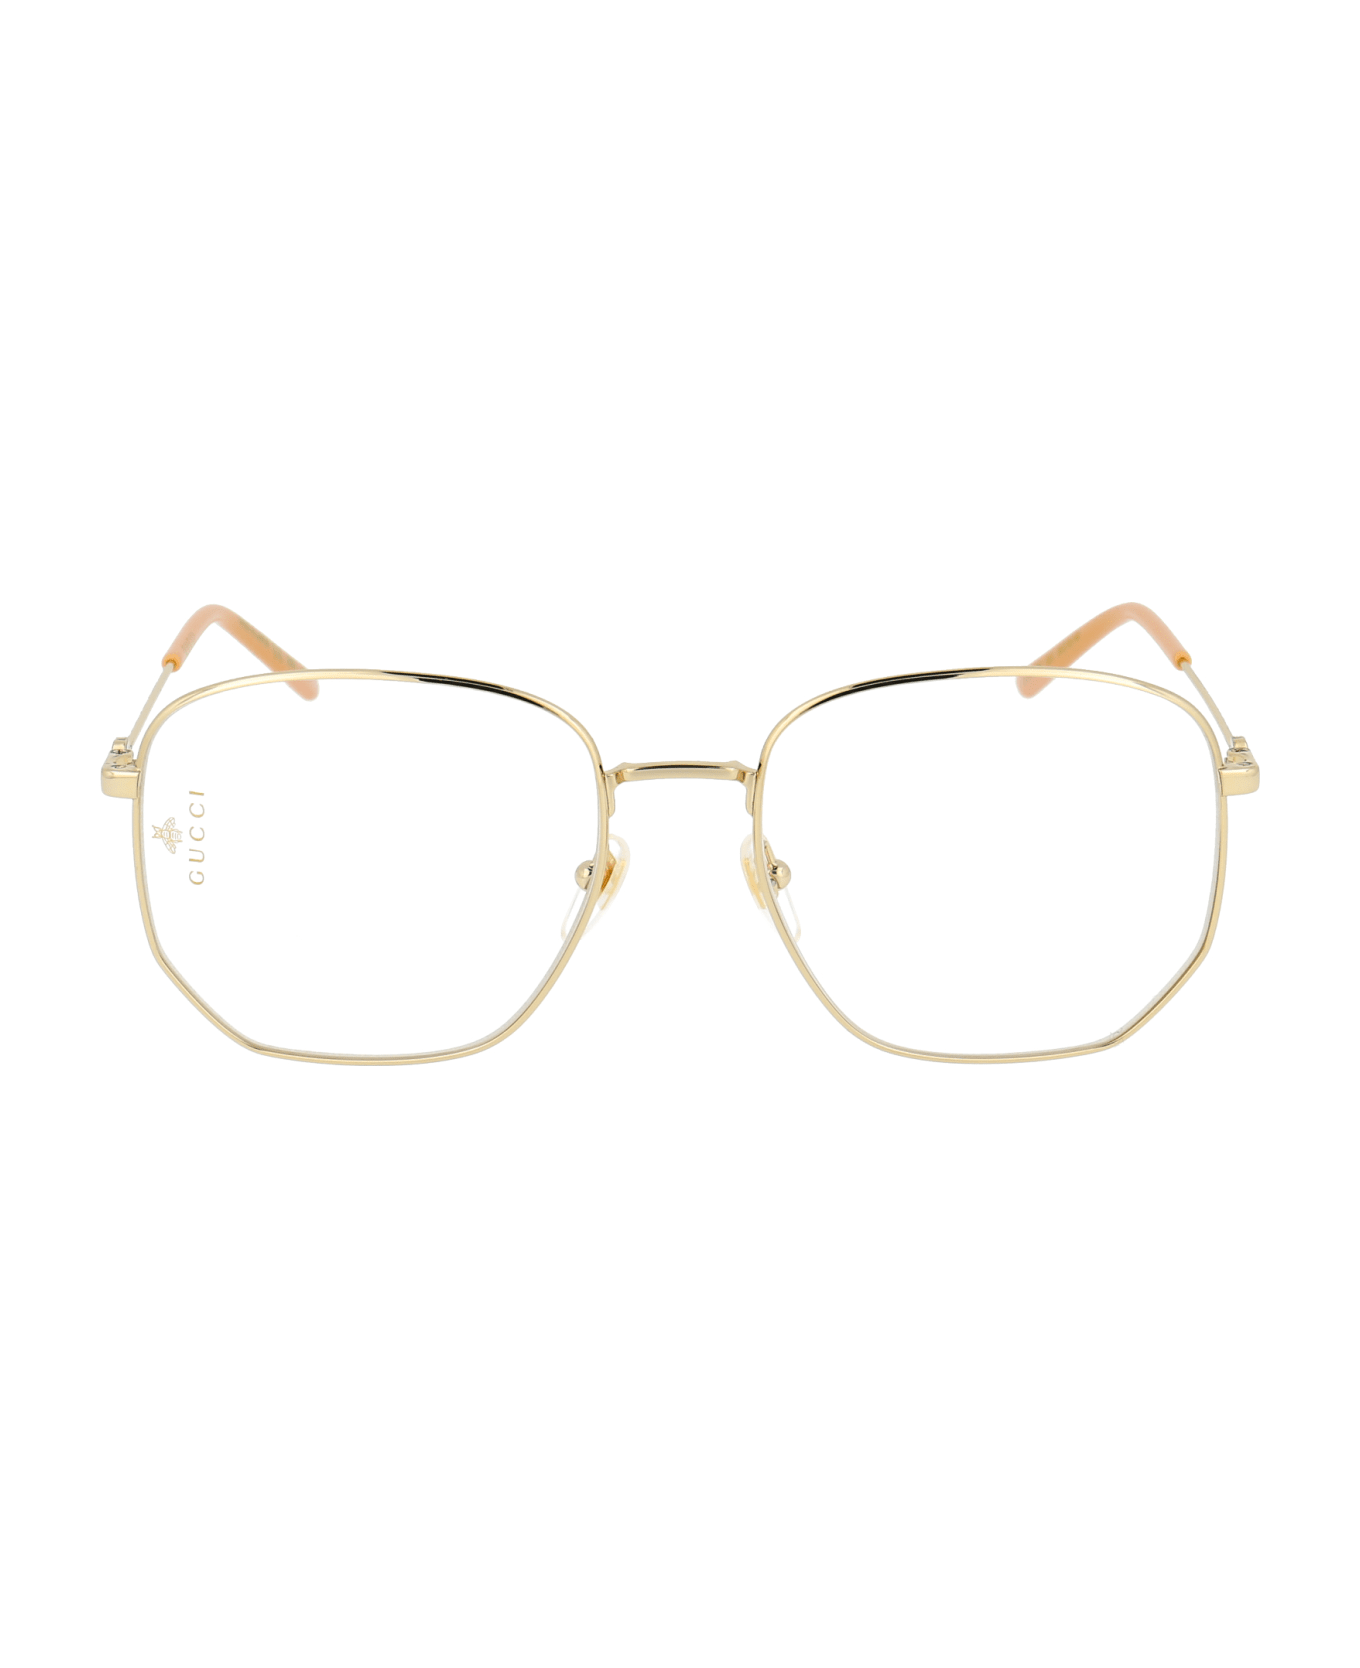 Gucci Eyewear Gg0396s Sunglasses - 001 GOLD GOLD TRANSPARENT